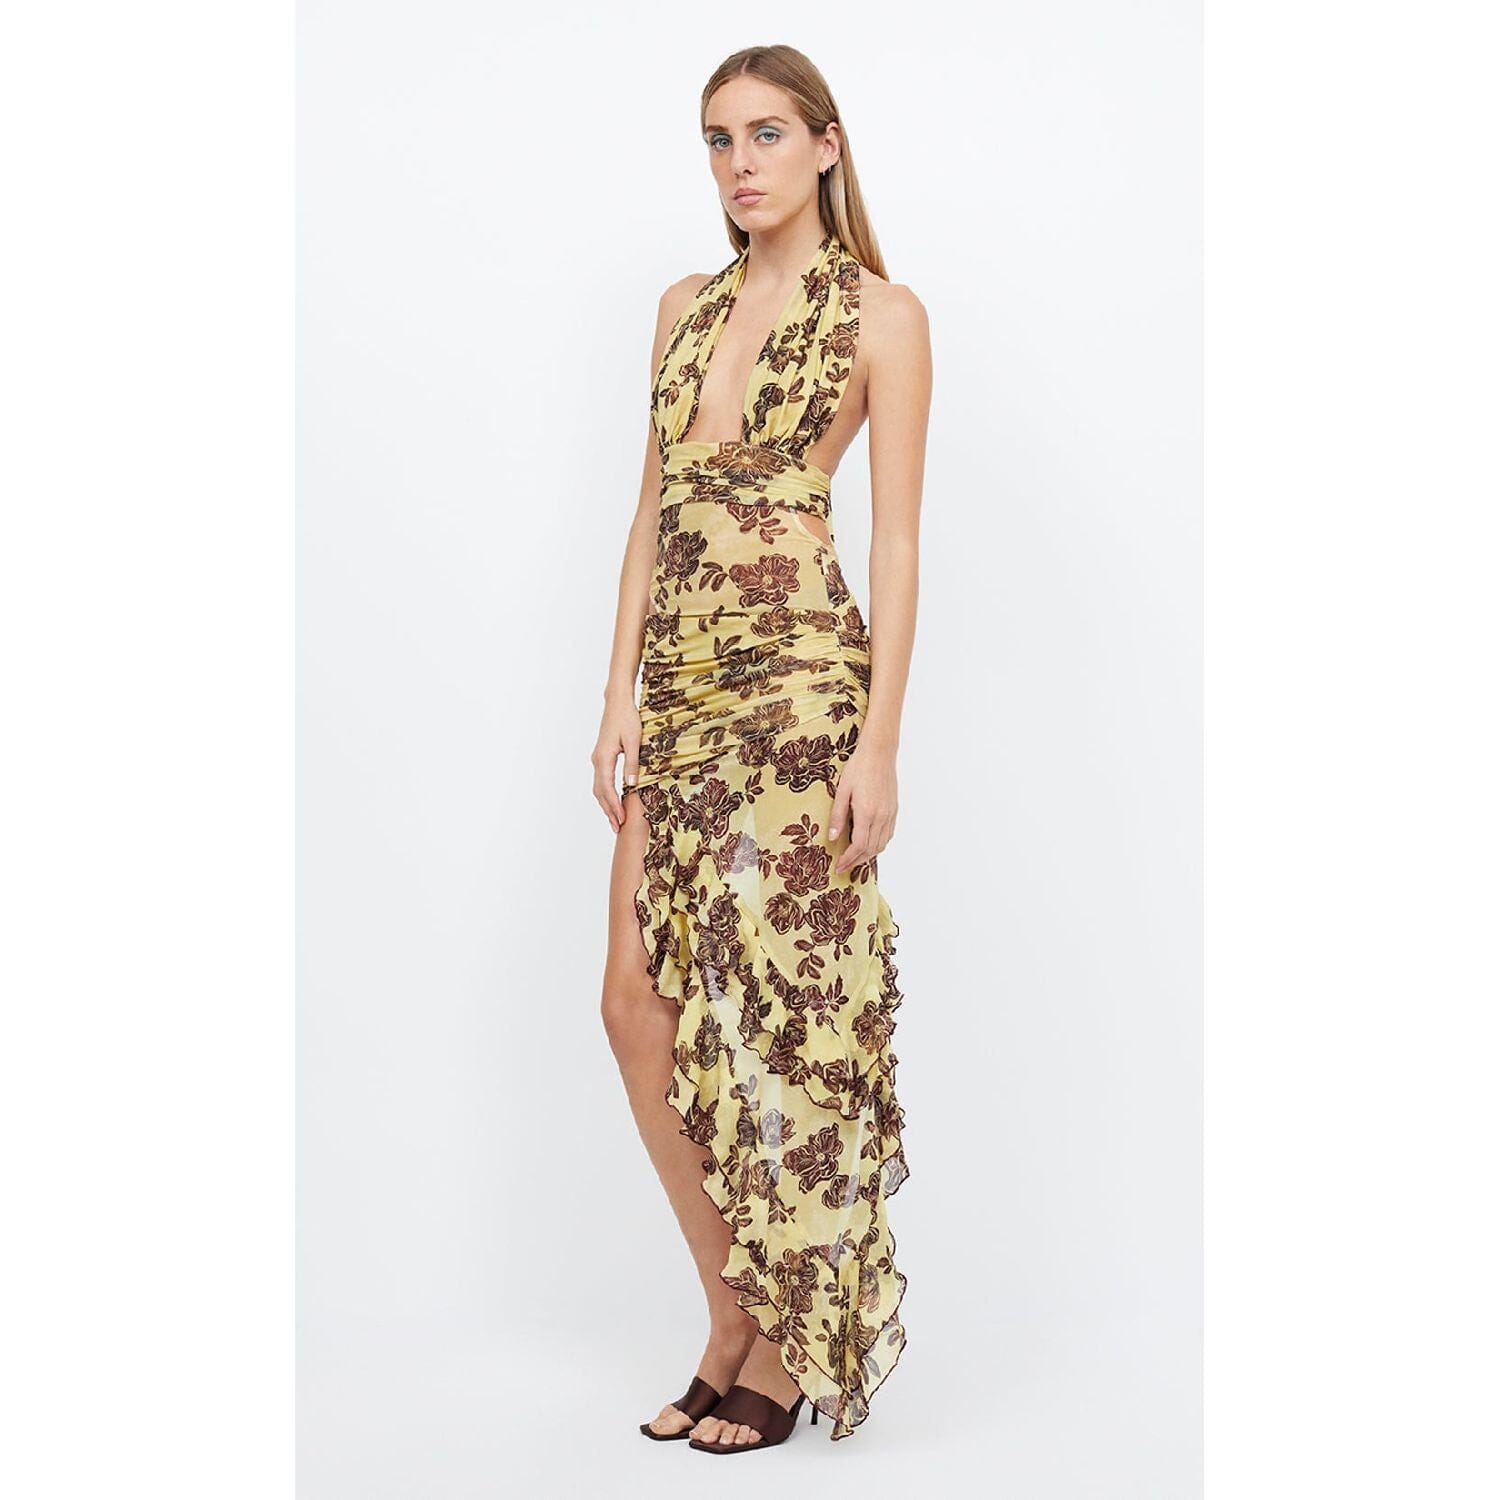 Malibu Bay Halter Dress - Citrus Plum Floral Dresses Bec & Bridge 